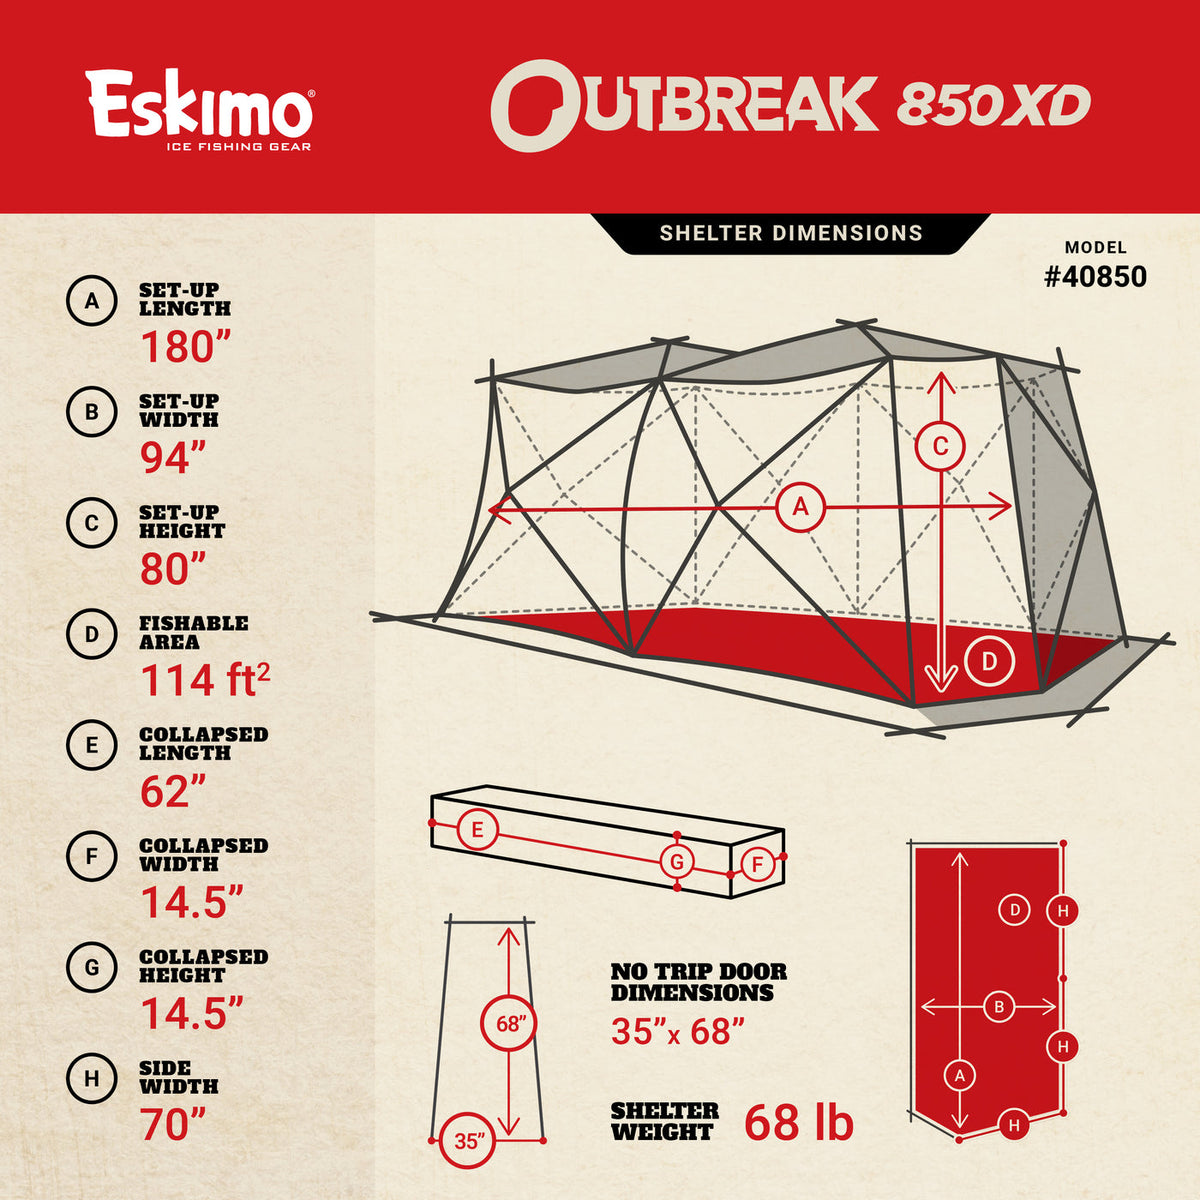 Eskimo Outbreak 850XD - LOTWSHQ